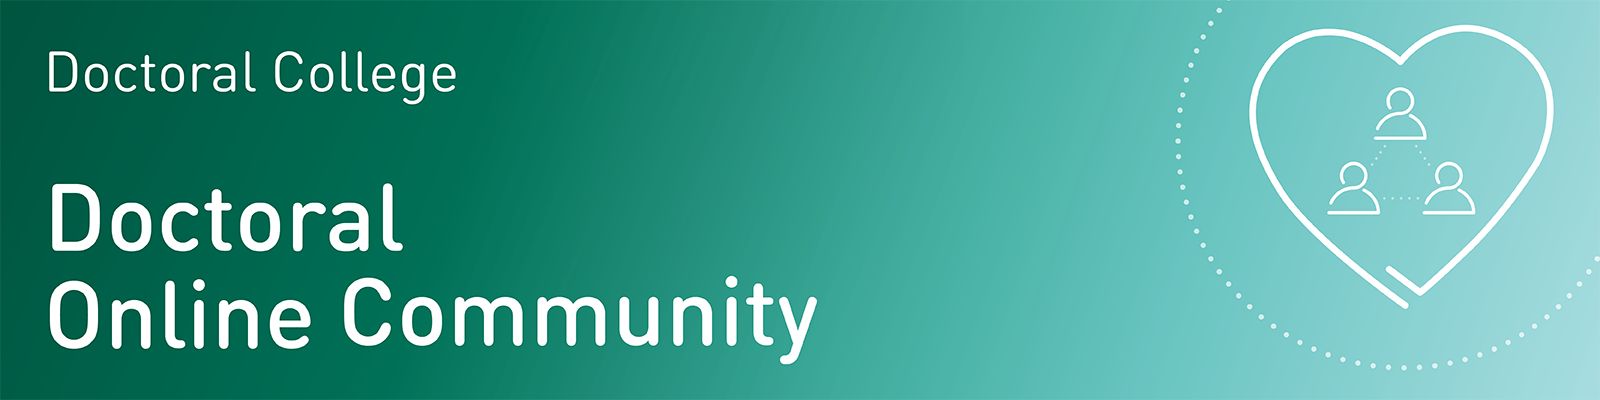 Doctoral Online Community banner